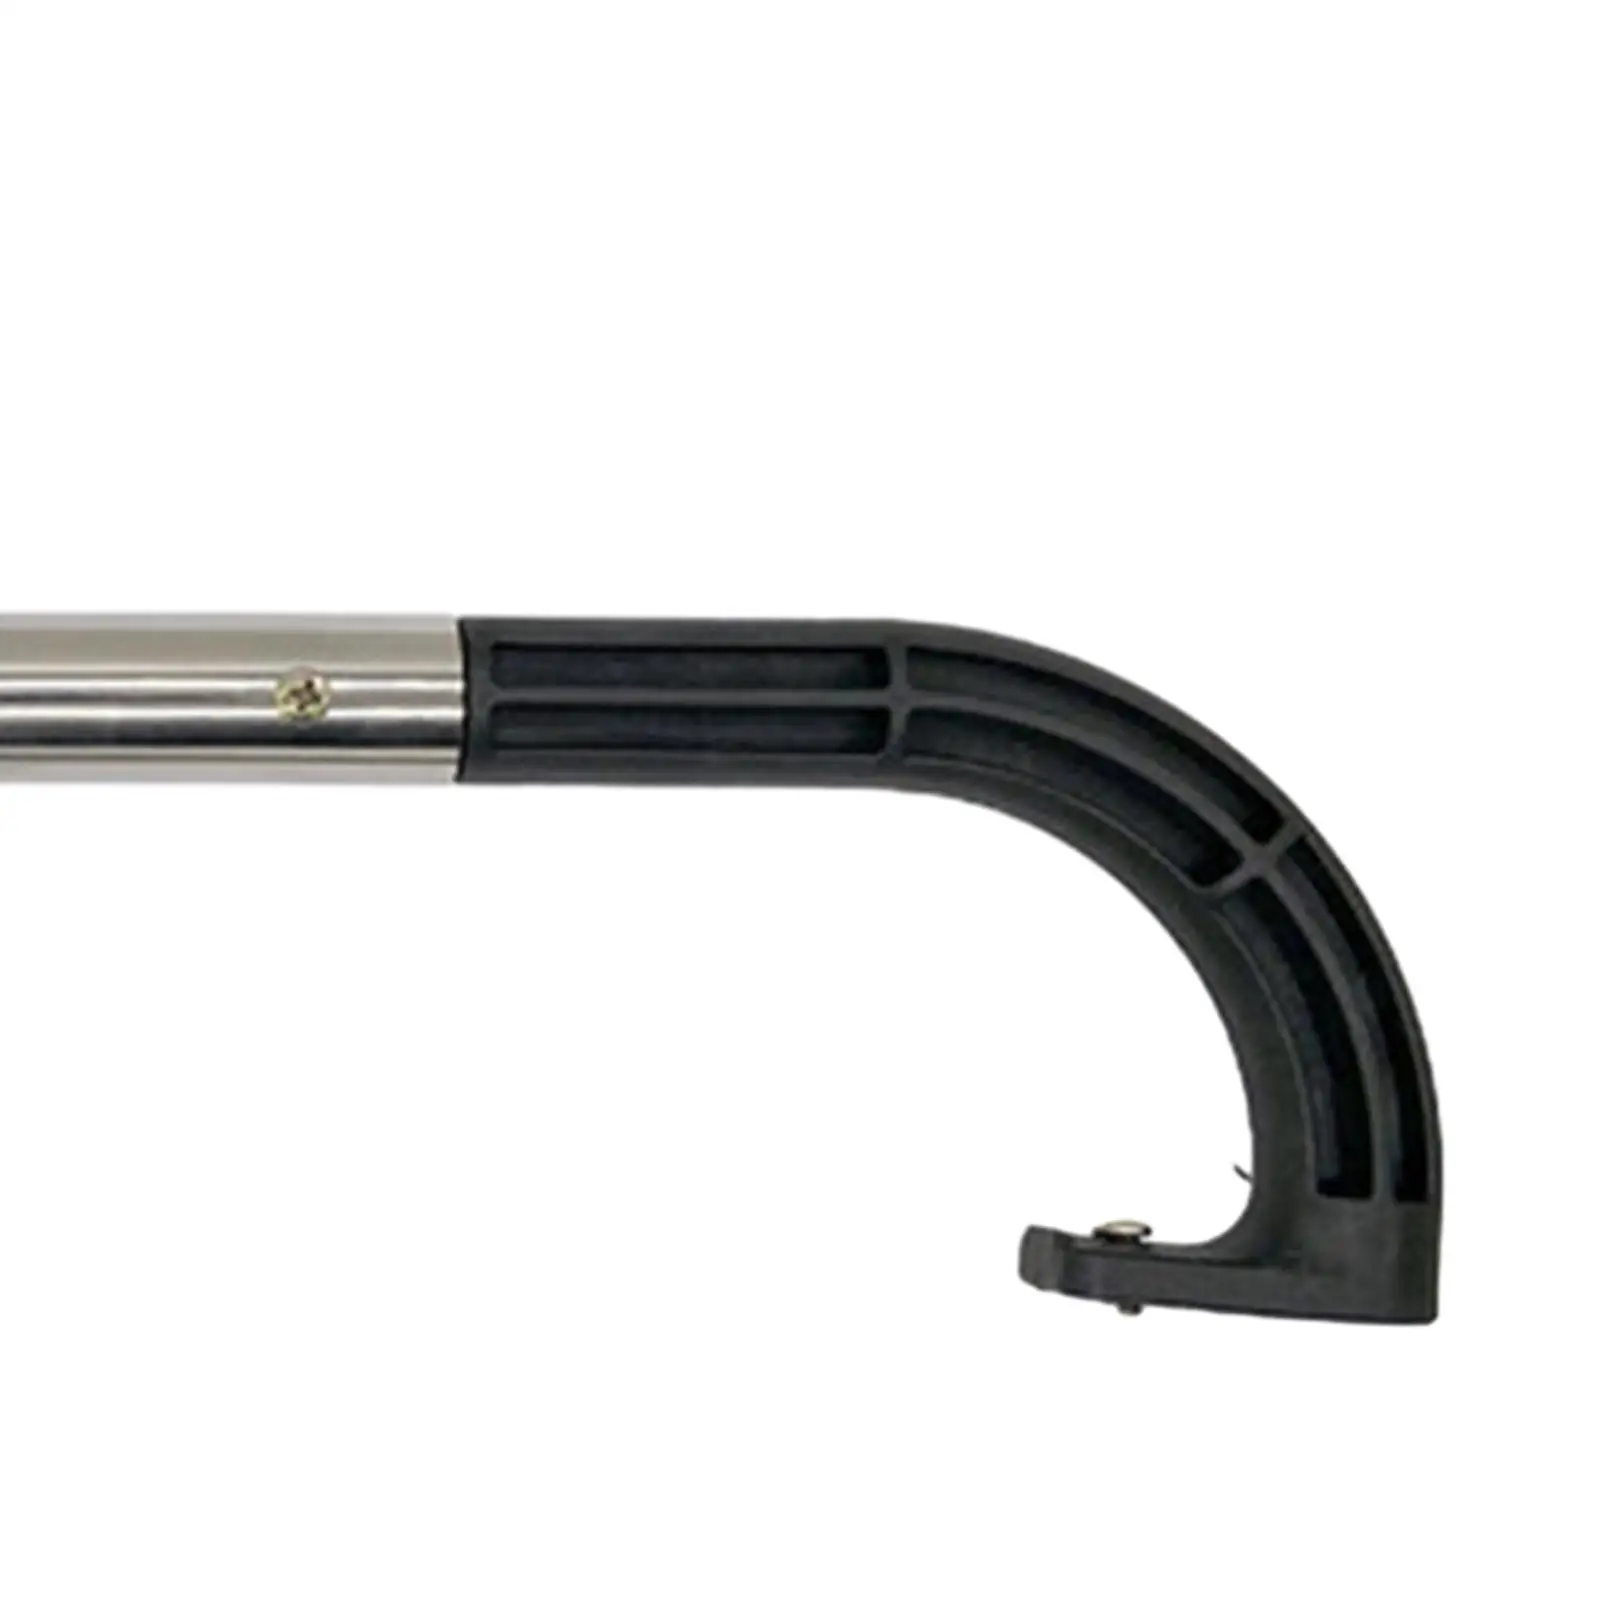 180mm Electric Grinder Polisher Handle Grip Parts Good Craftsmanship Total Length 400mm Lightweight Sturdy Anti Slip Accessories